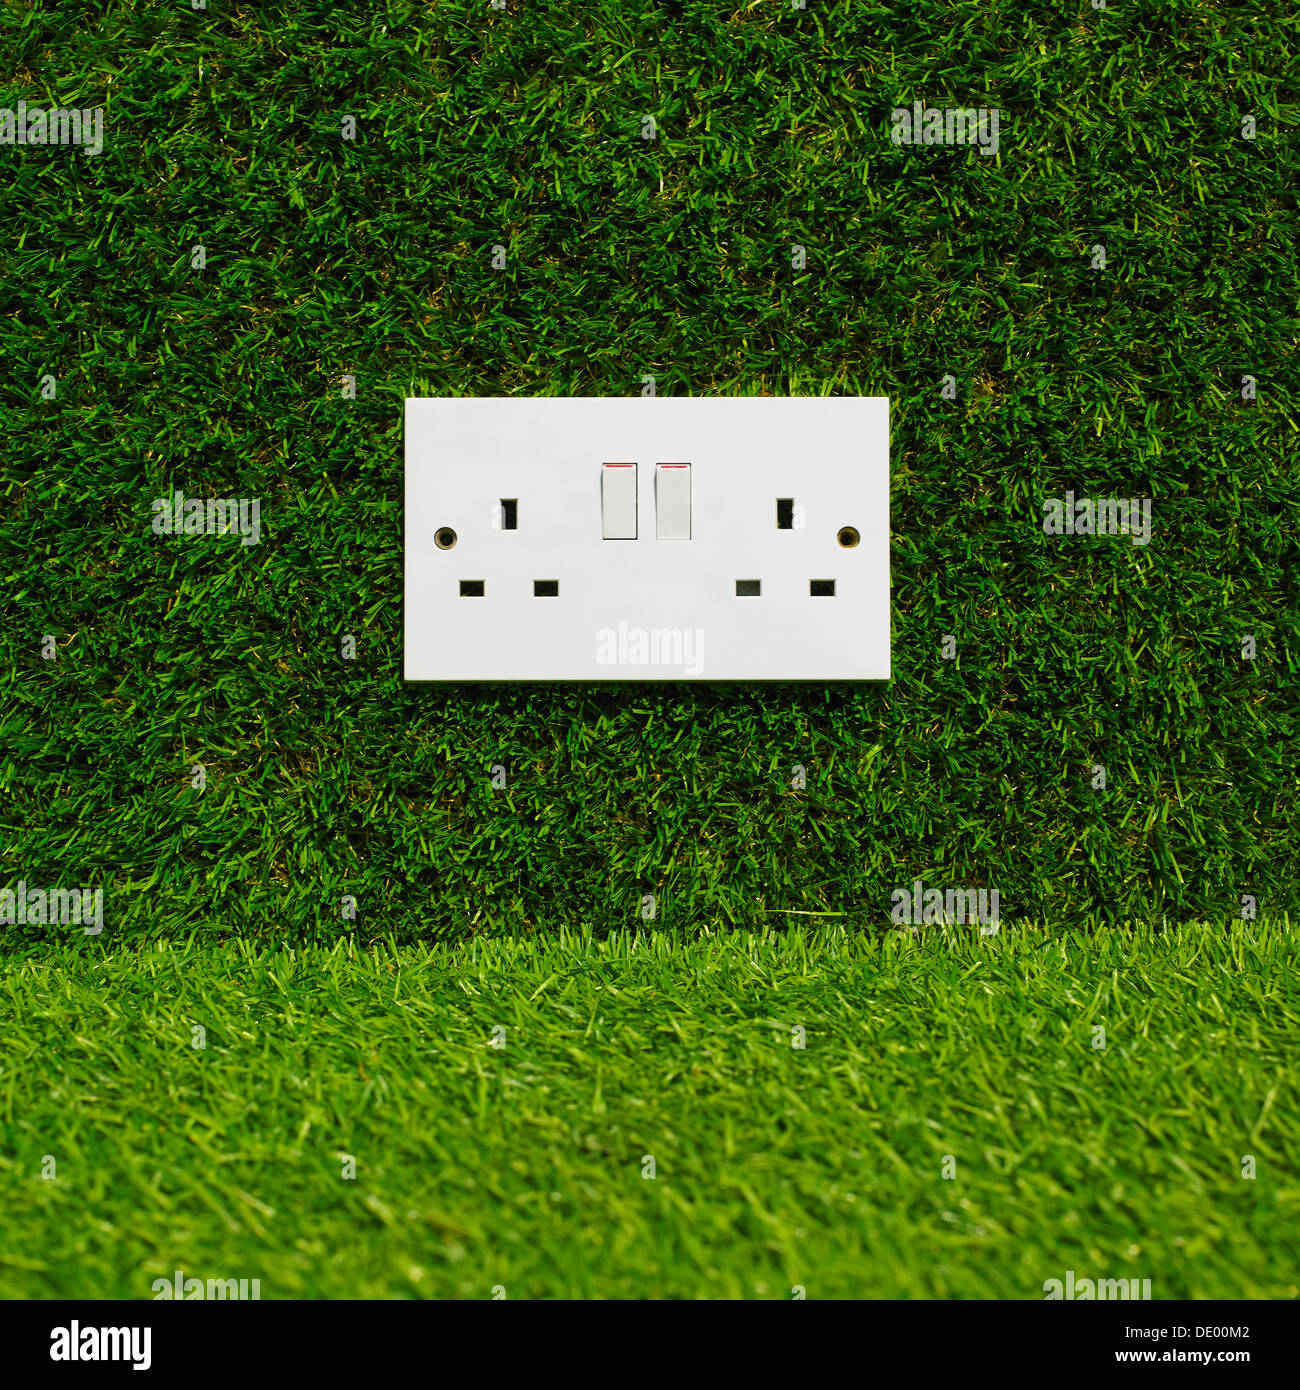 Electrical Plug Socket On Grass Background. Stock Photo